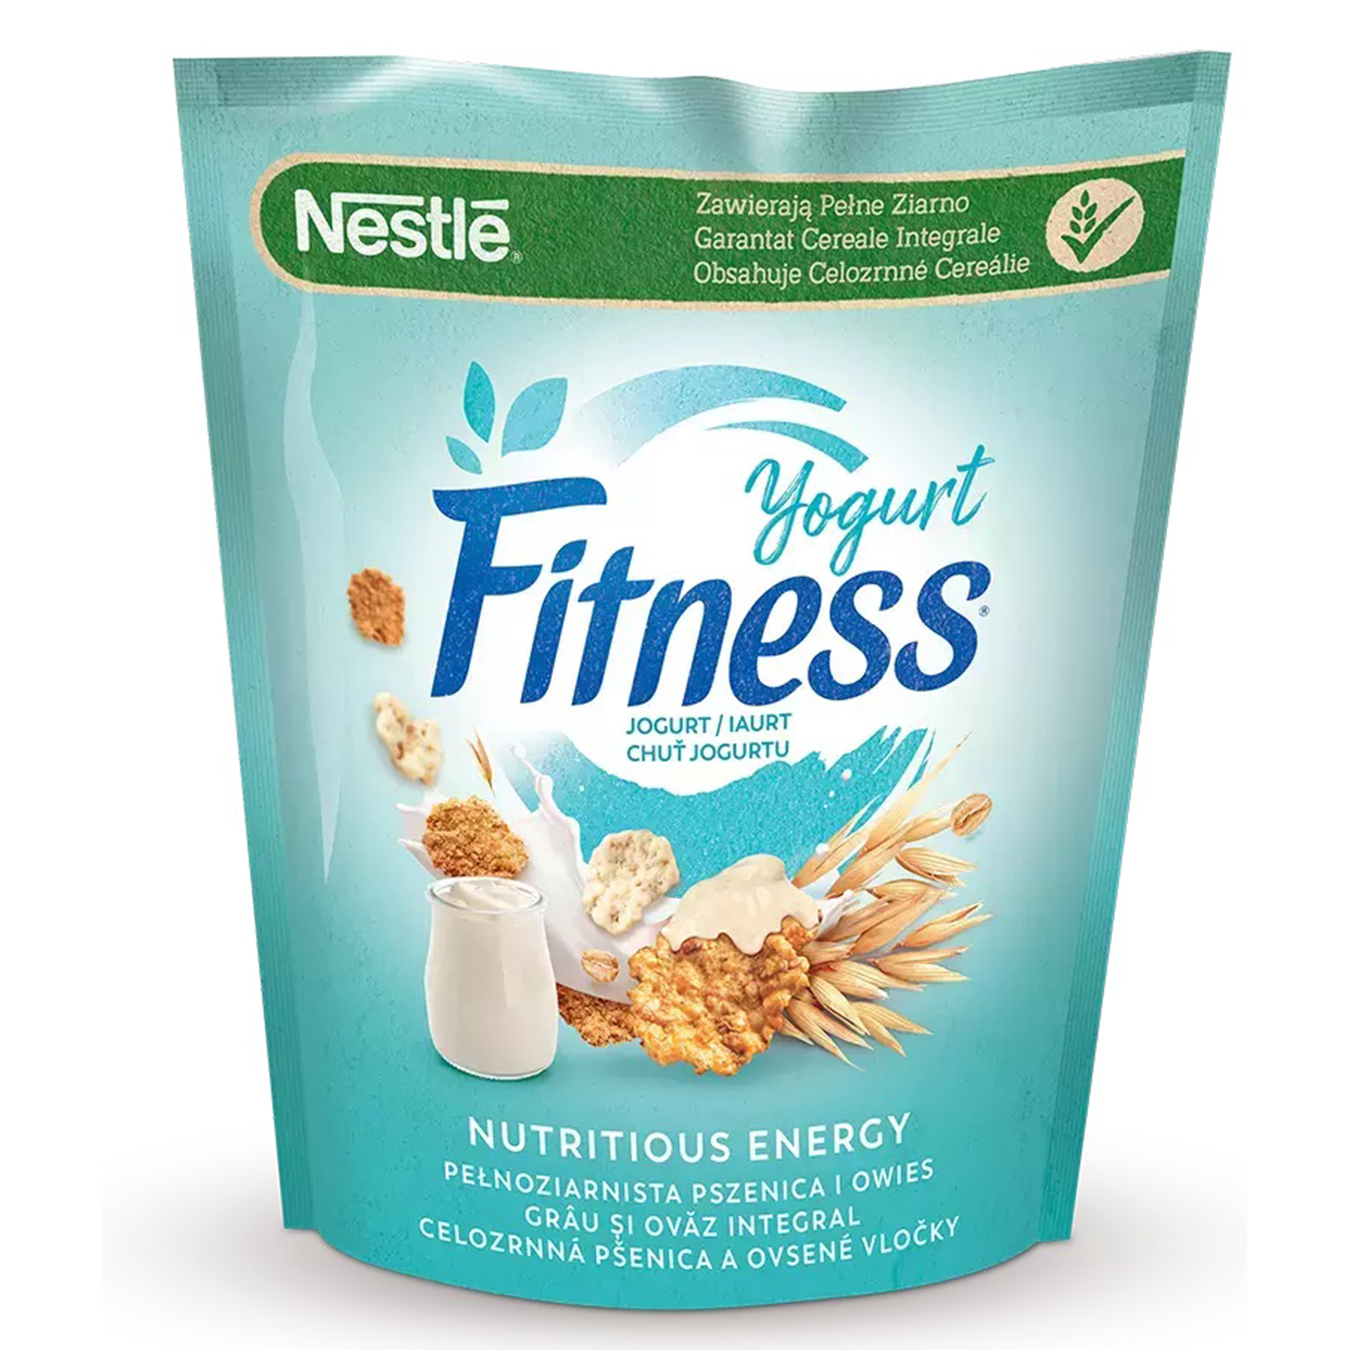 Завтрак готовый Nestle FITNESS йогурт 225г